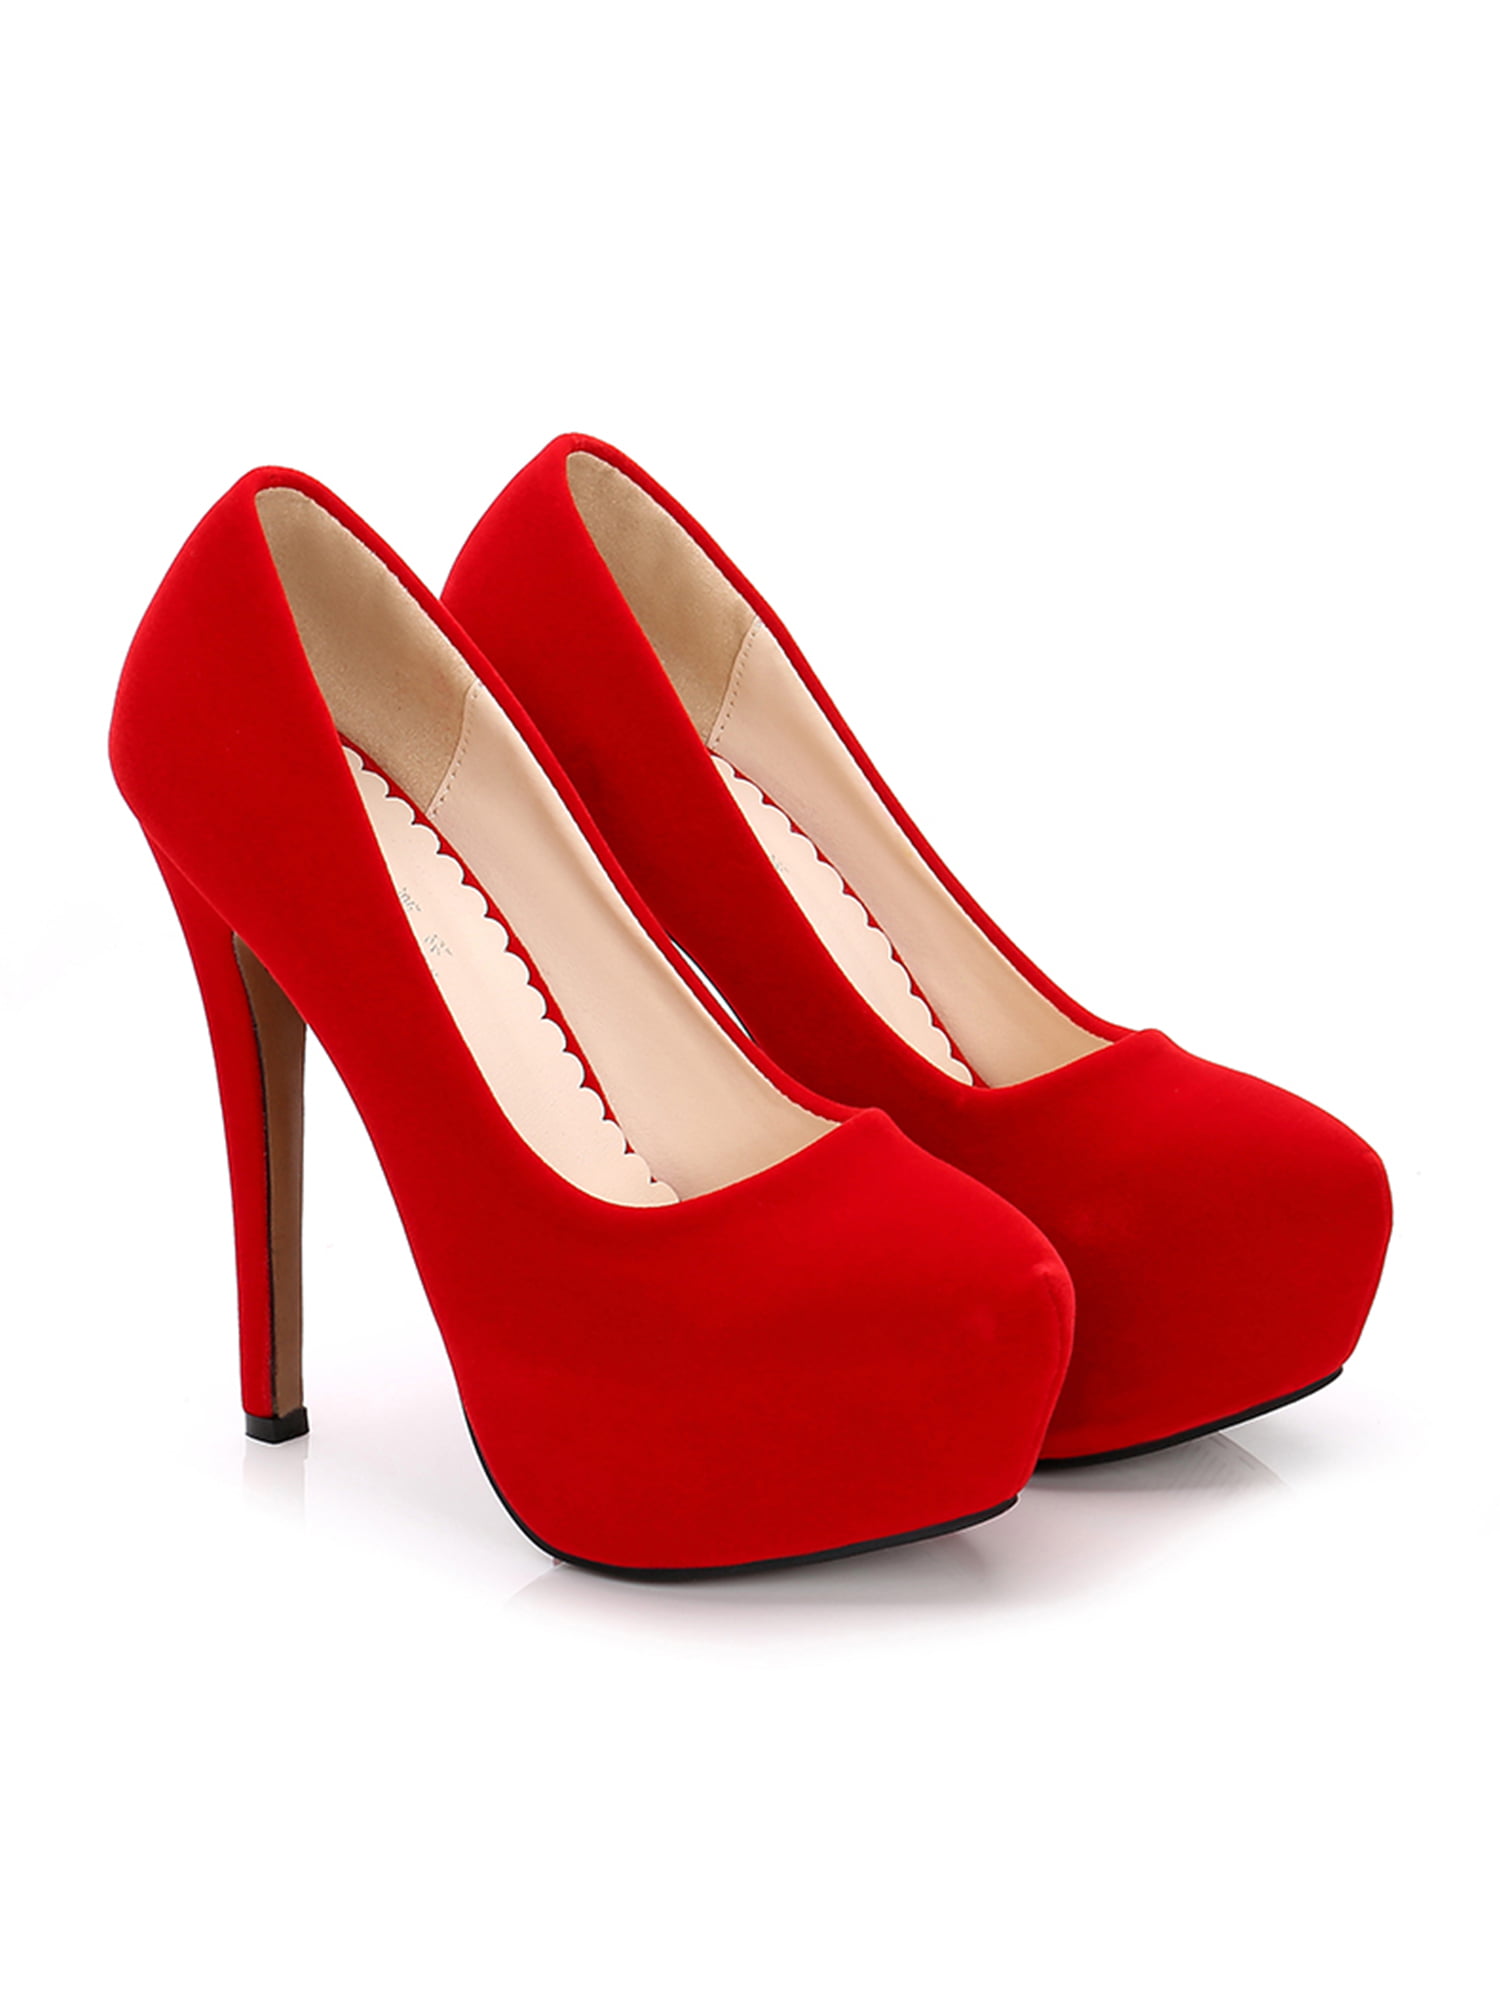 High Heels for Men | Crossdresser & Drag Queen Shoes | Australia |  OtherWorld Shoes